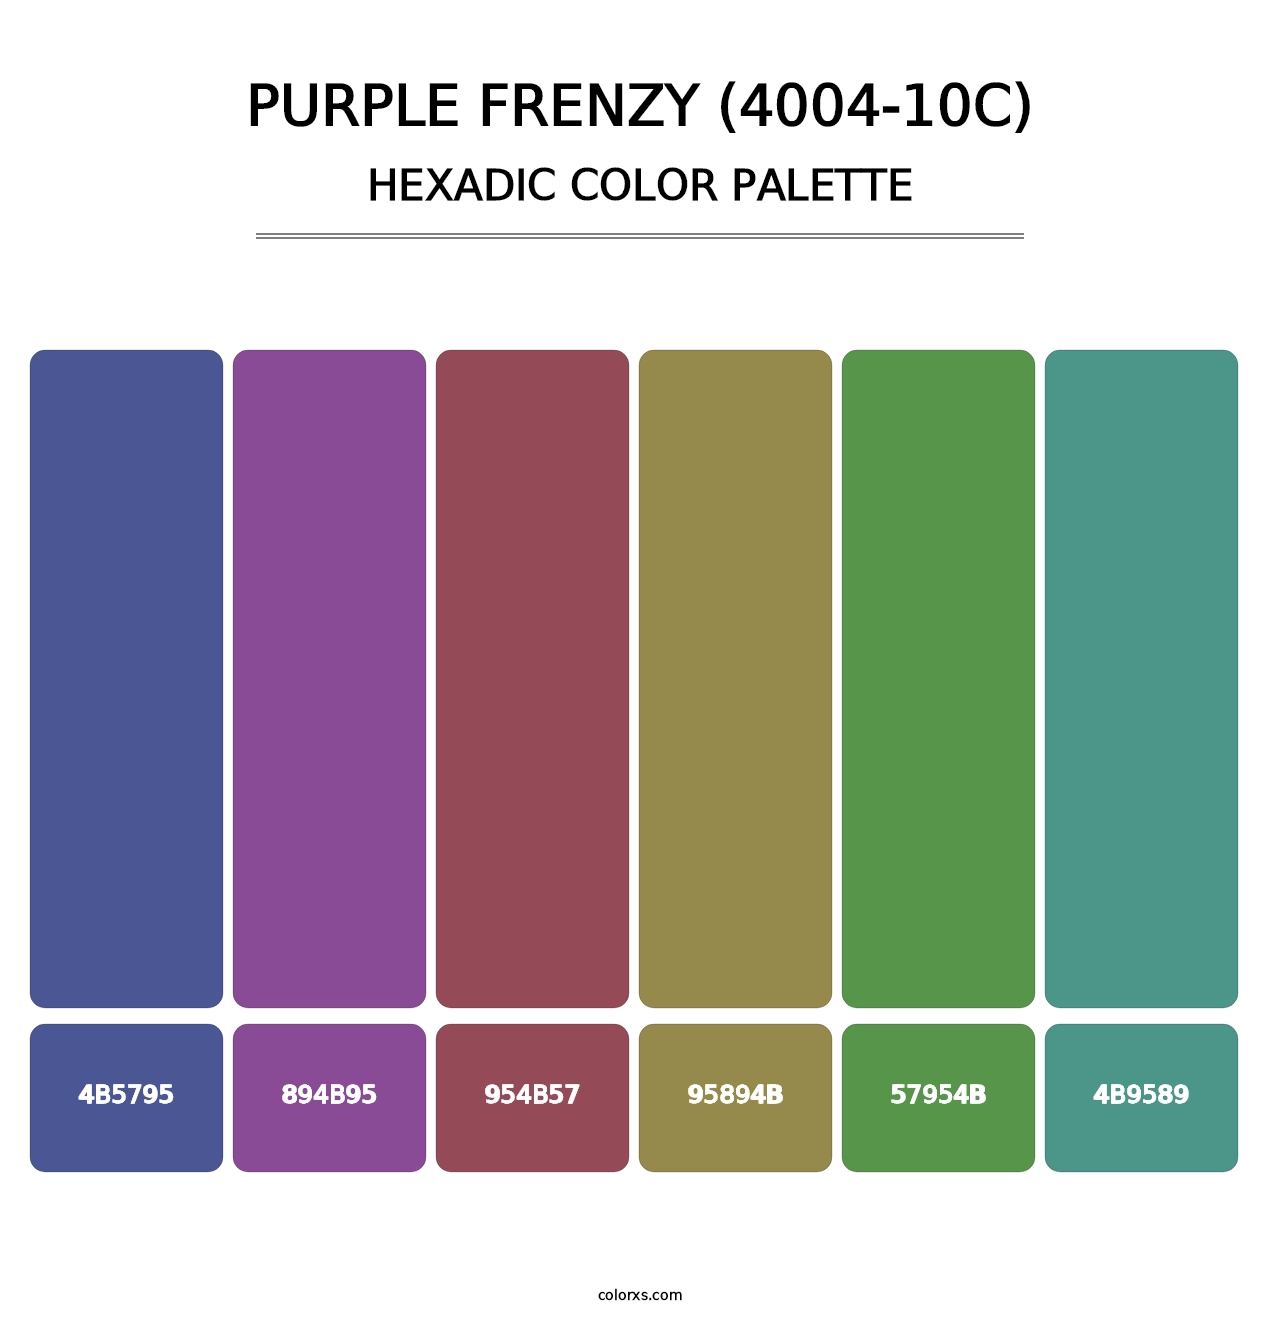 Purple Frenzy (4004-10C) - Hexadic Color Palette